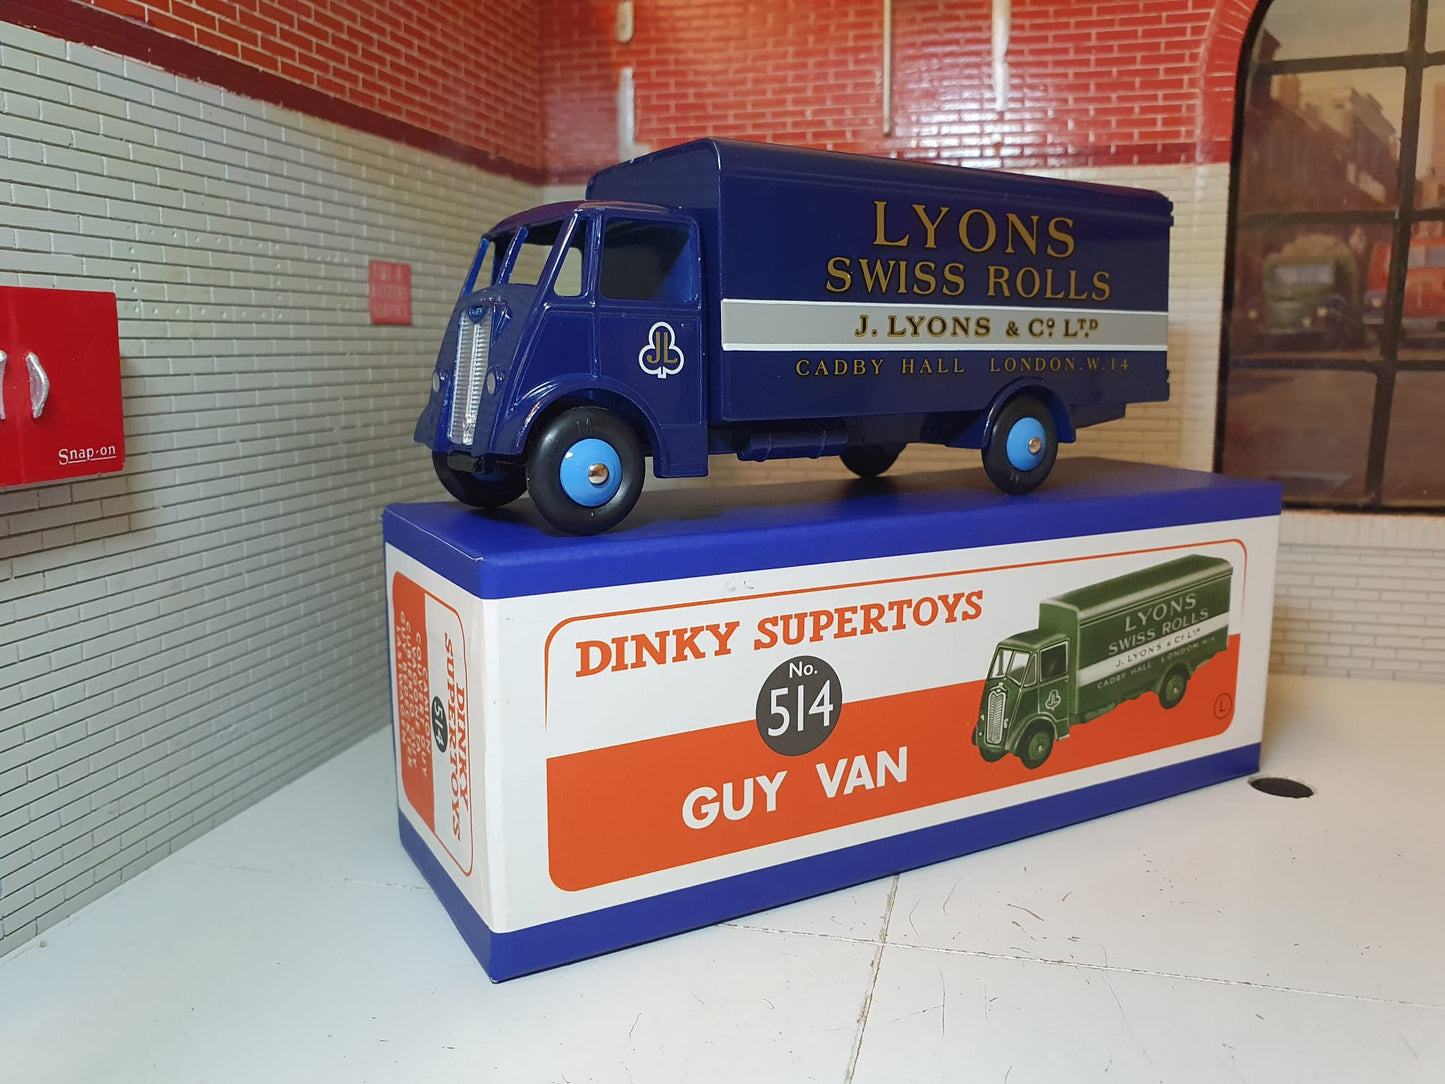 Guy Delivery Van #514 Dinky